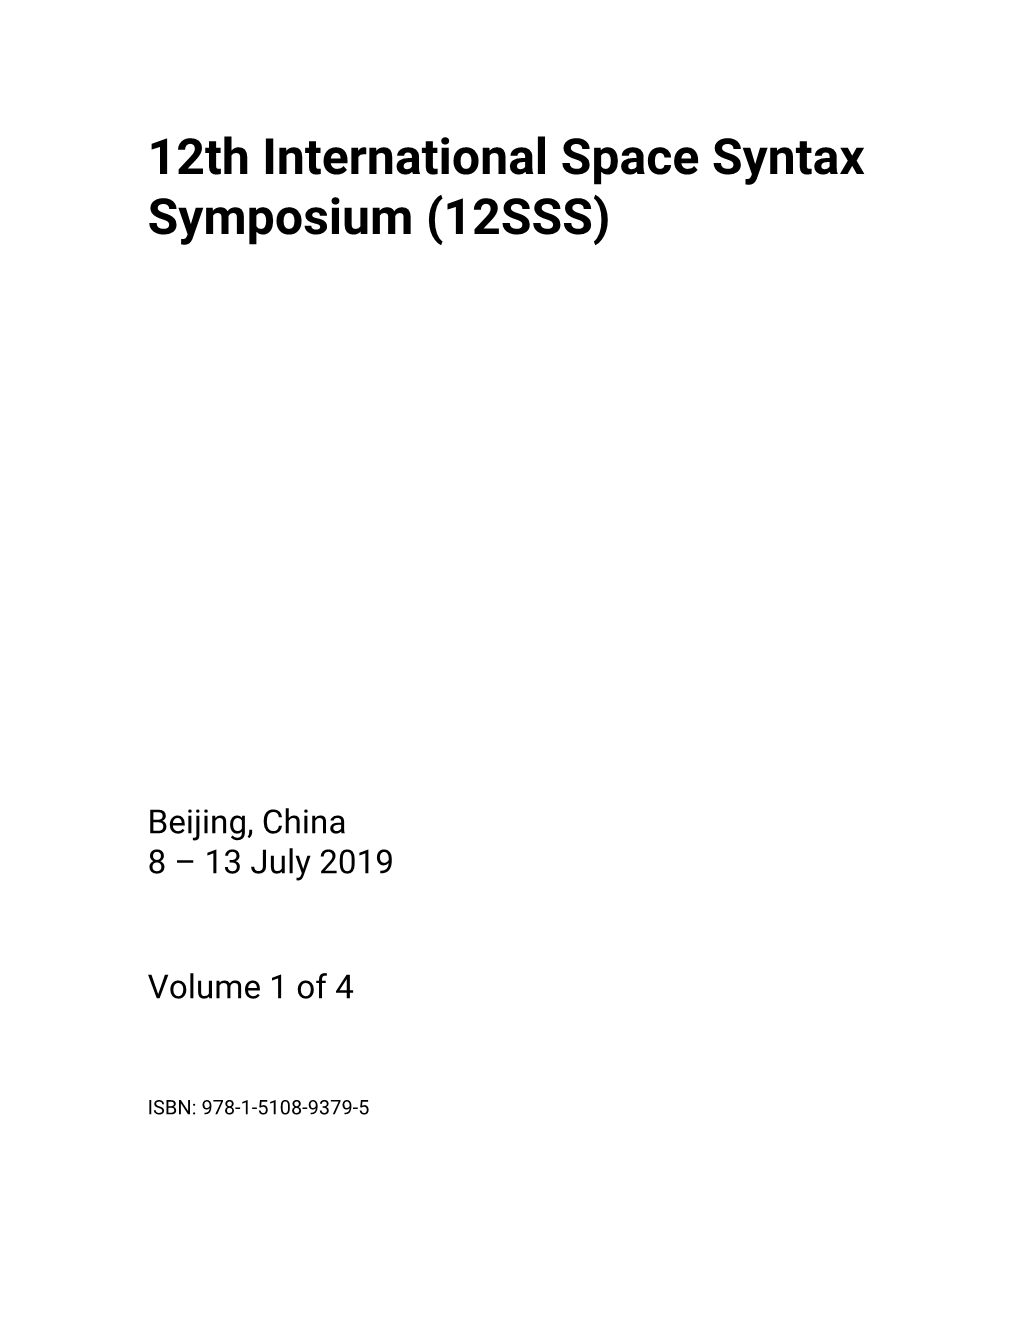 12Th International Space Syntax Symposium (12SSS)